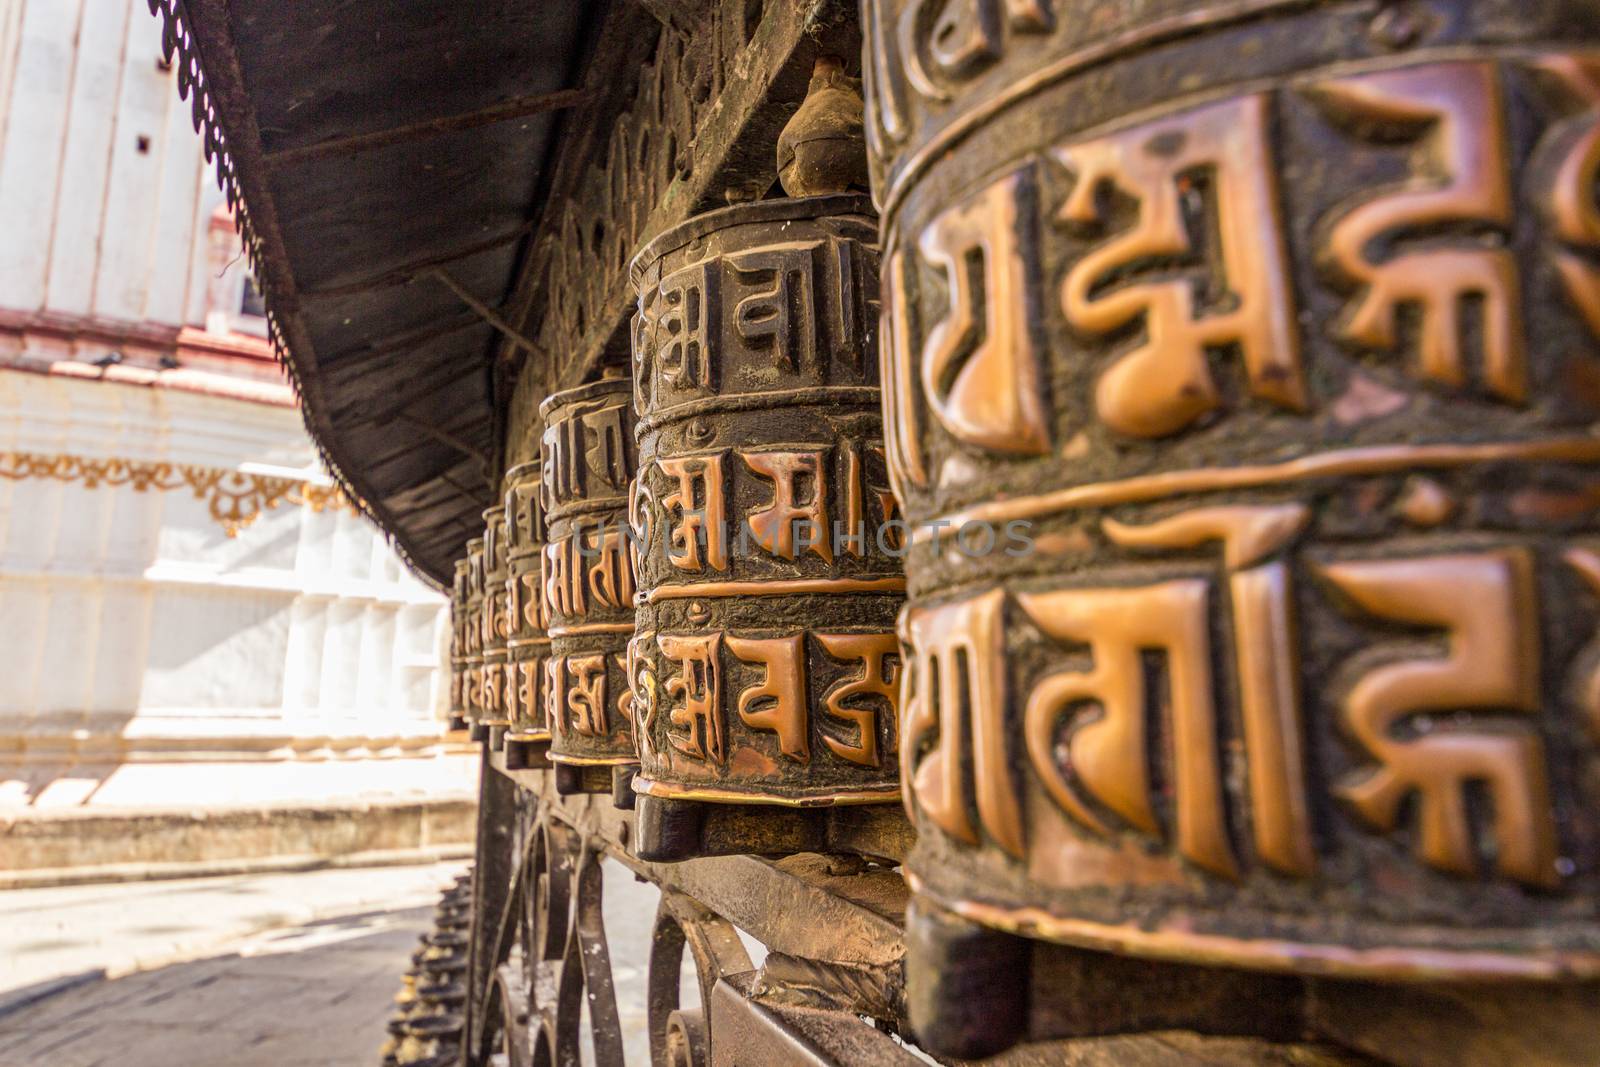 Tibetan prayer wheels or prayer's rolls of the faithful Buddhists.